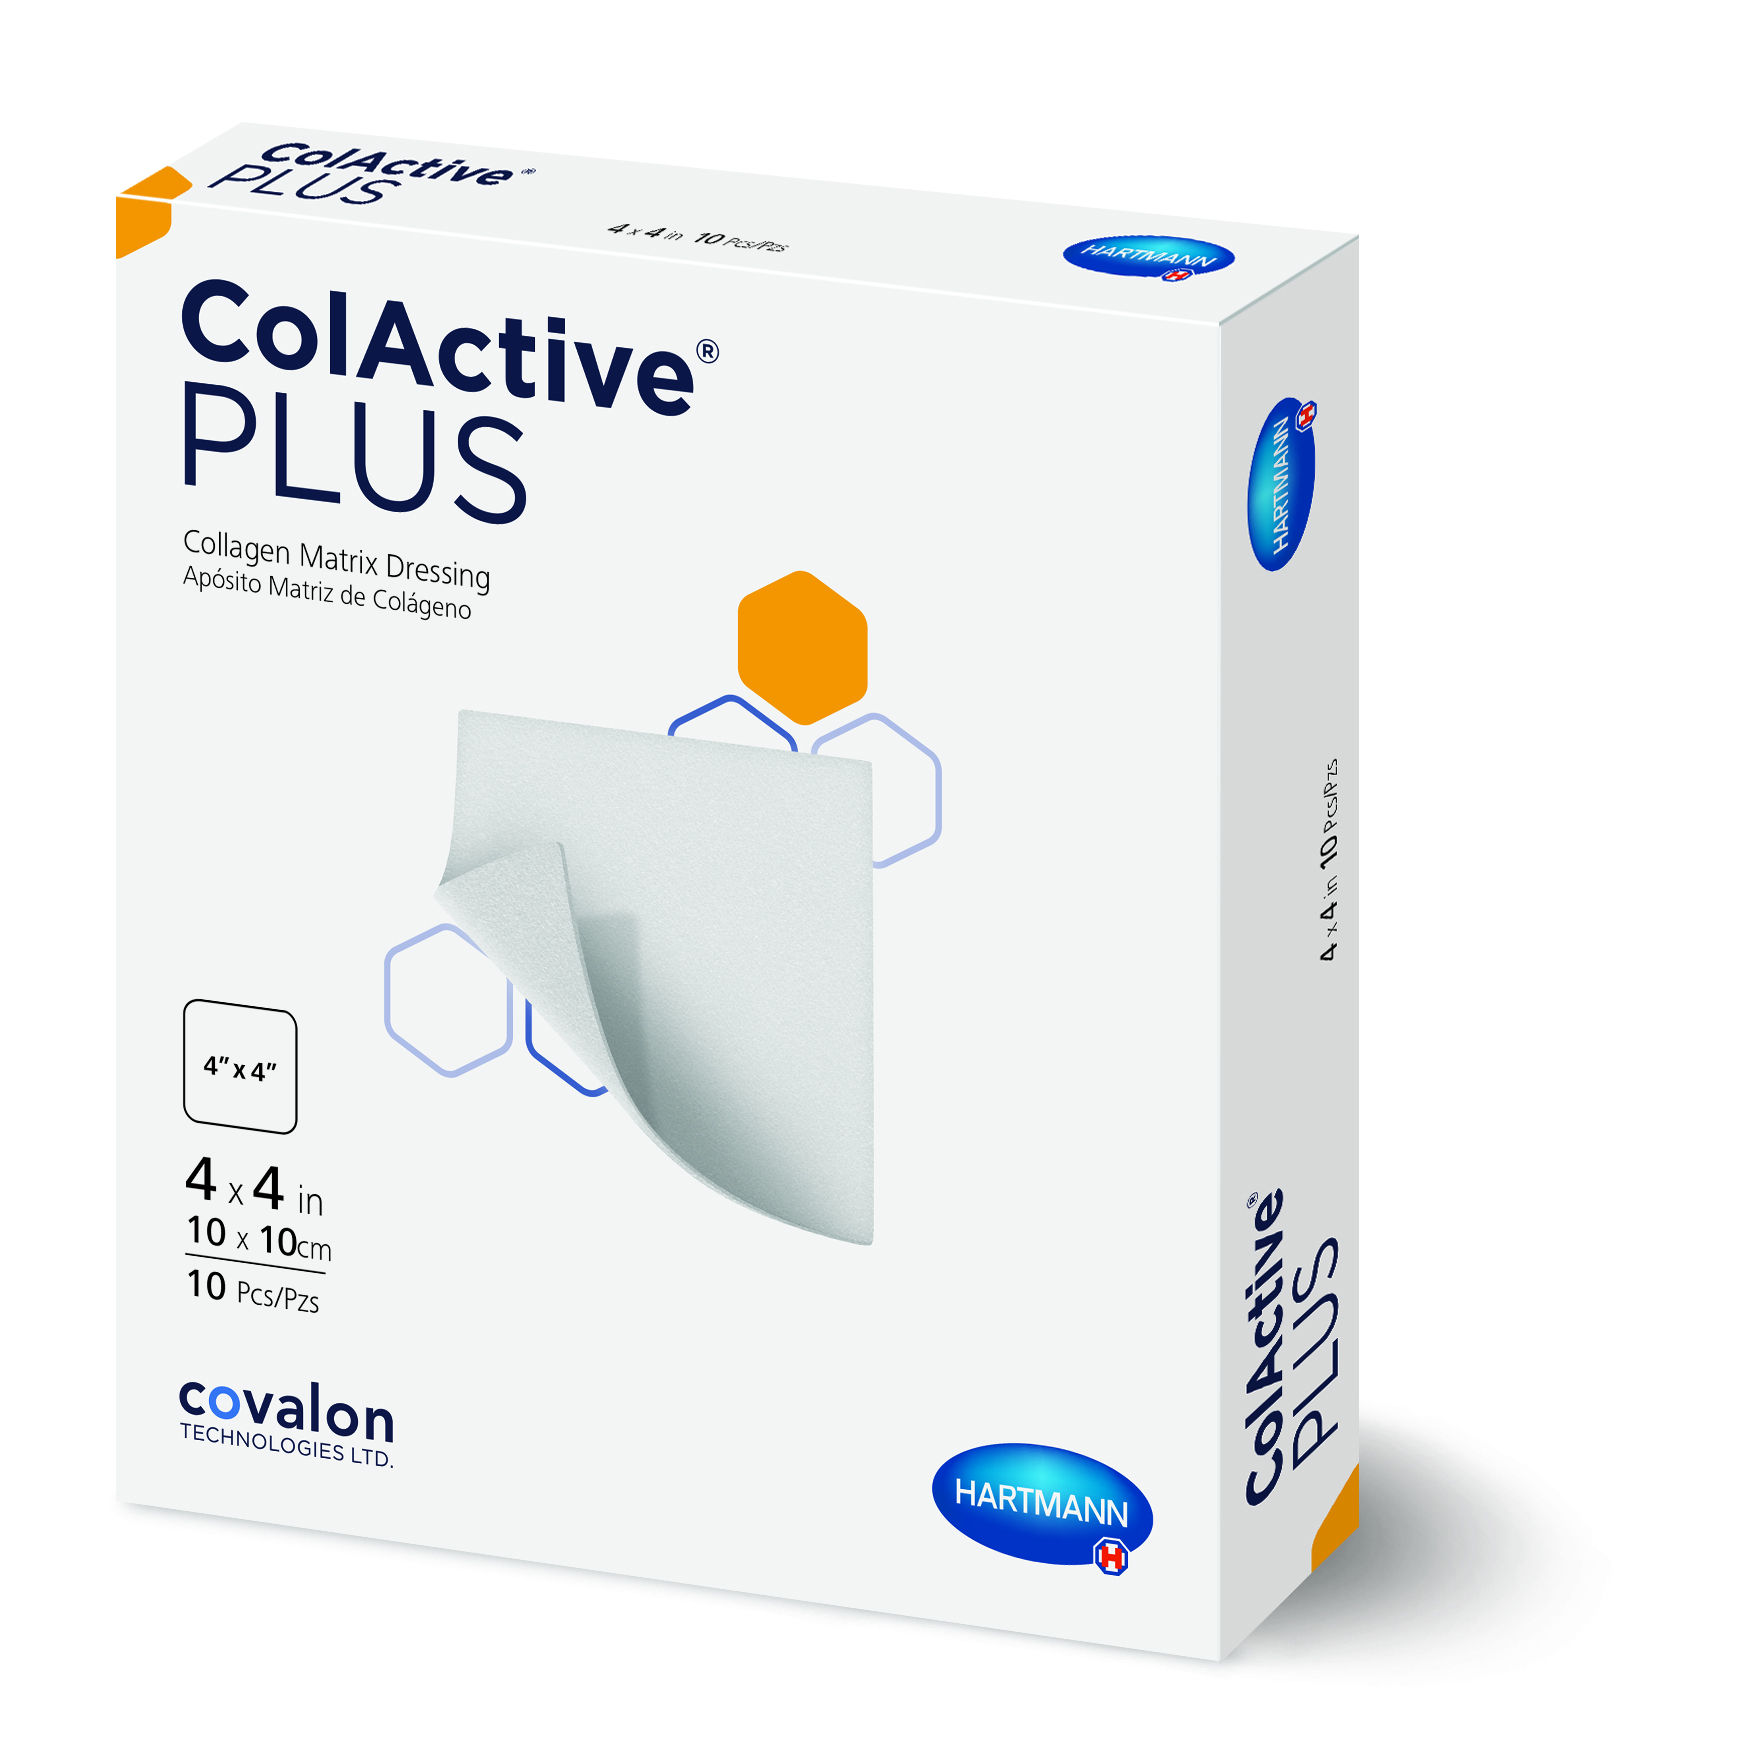 ColActive Plus Collagen Matrix Dressing